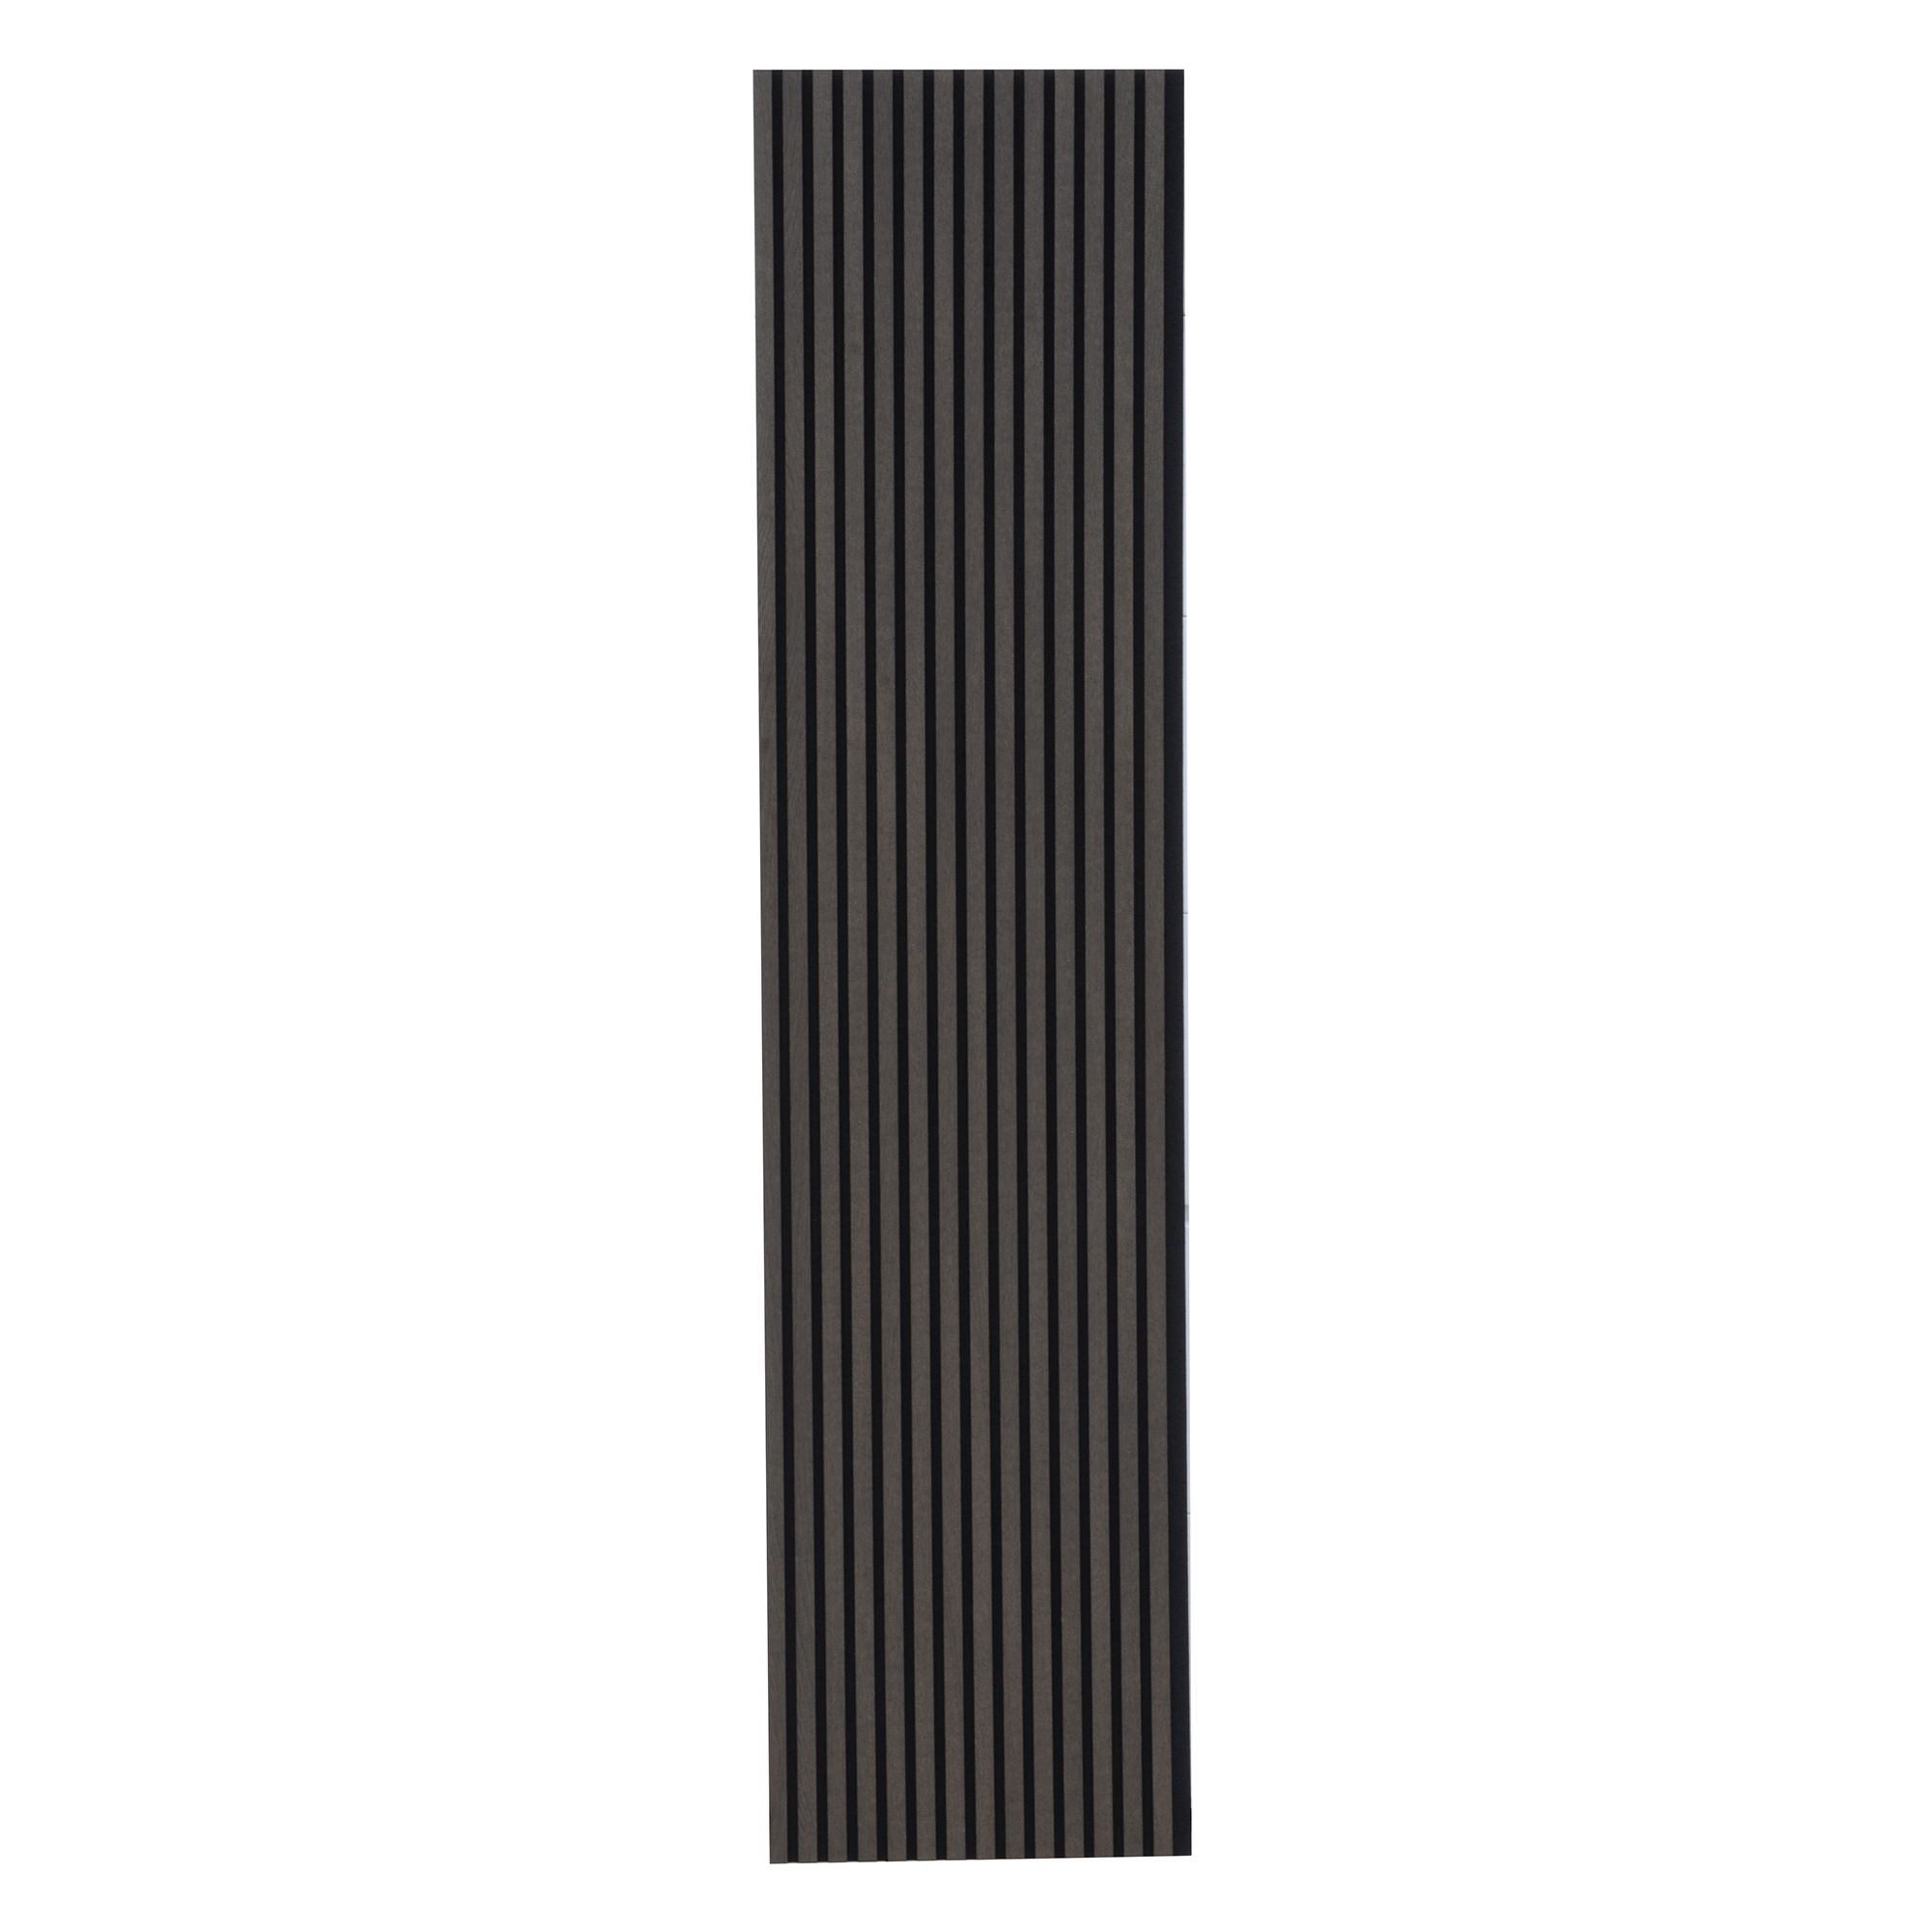 Smoke oak veneer Acoustic panel (L)2400mm (W)572.5mm, 7.2kg